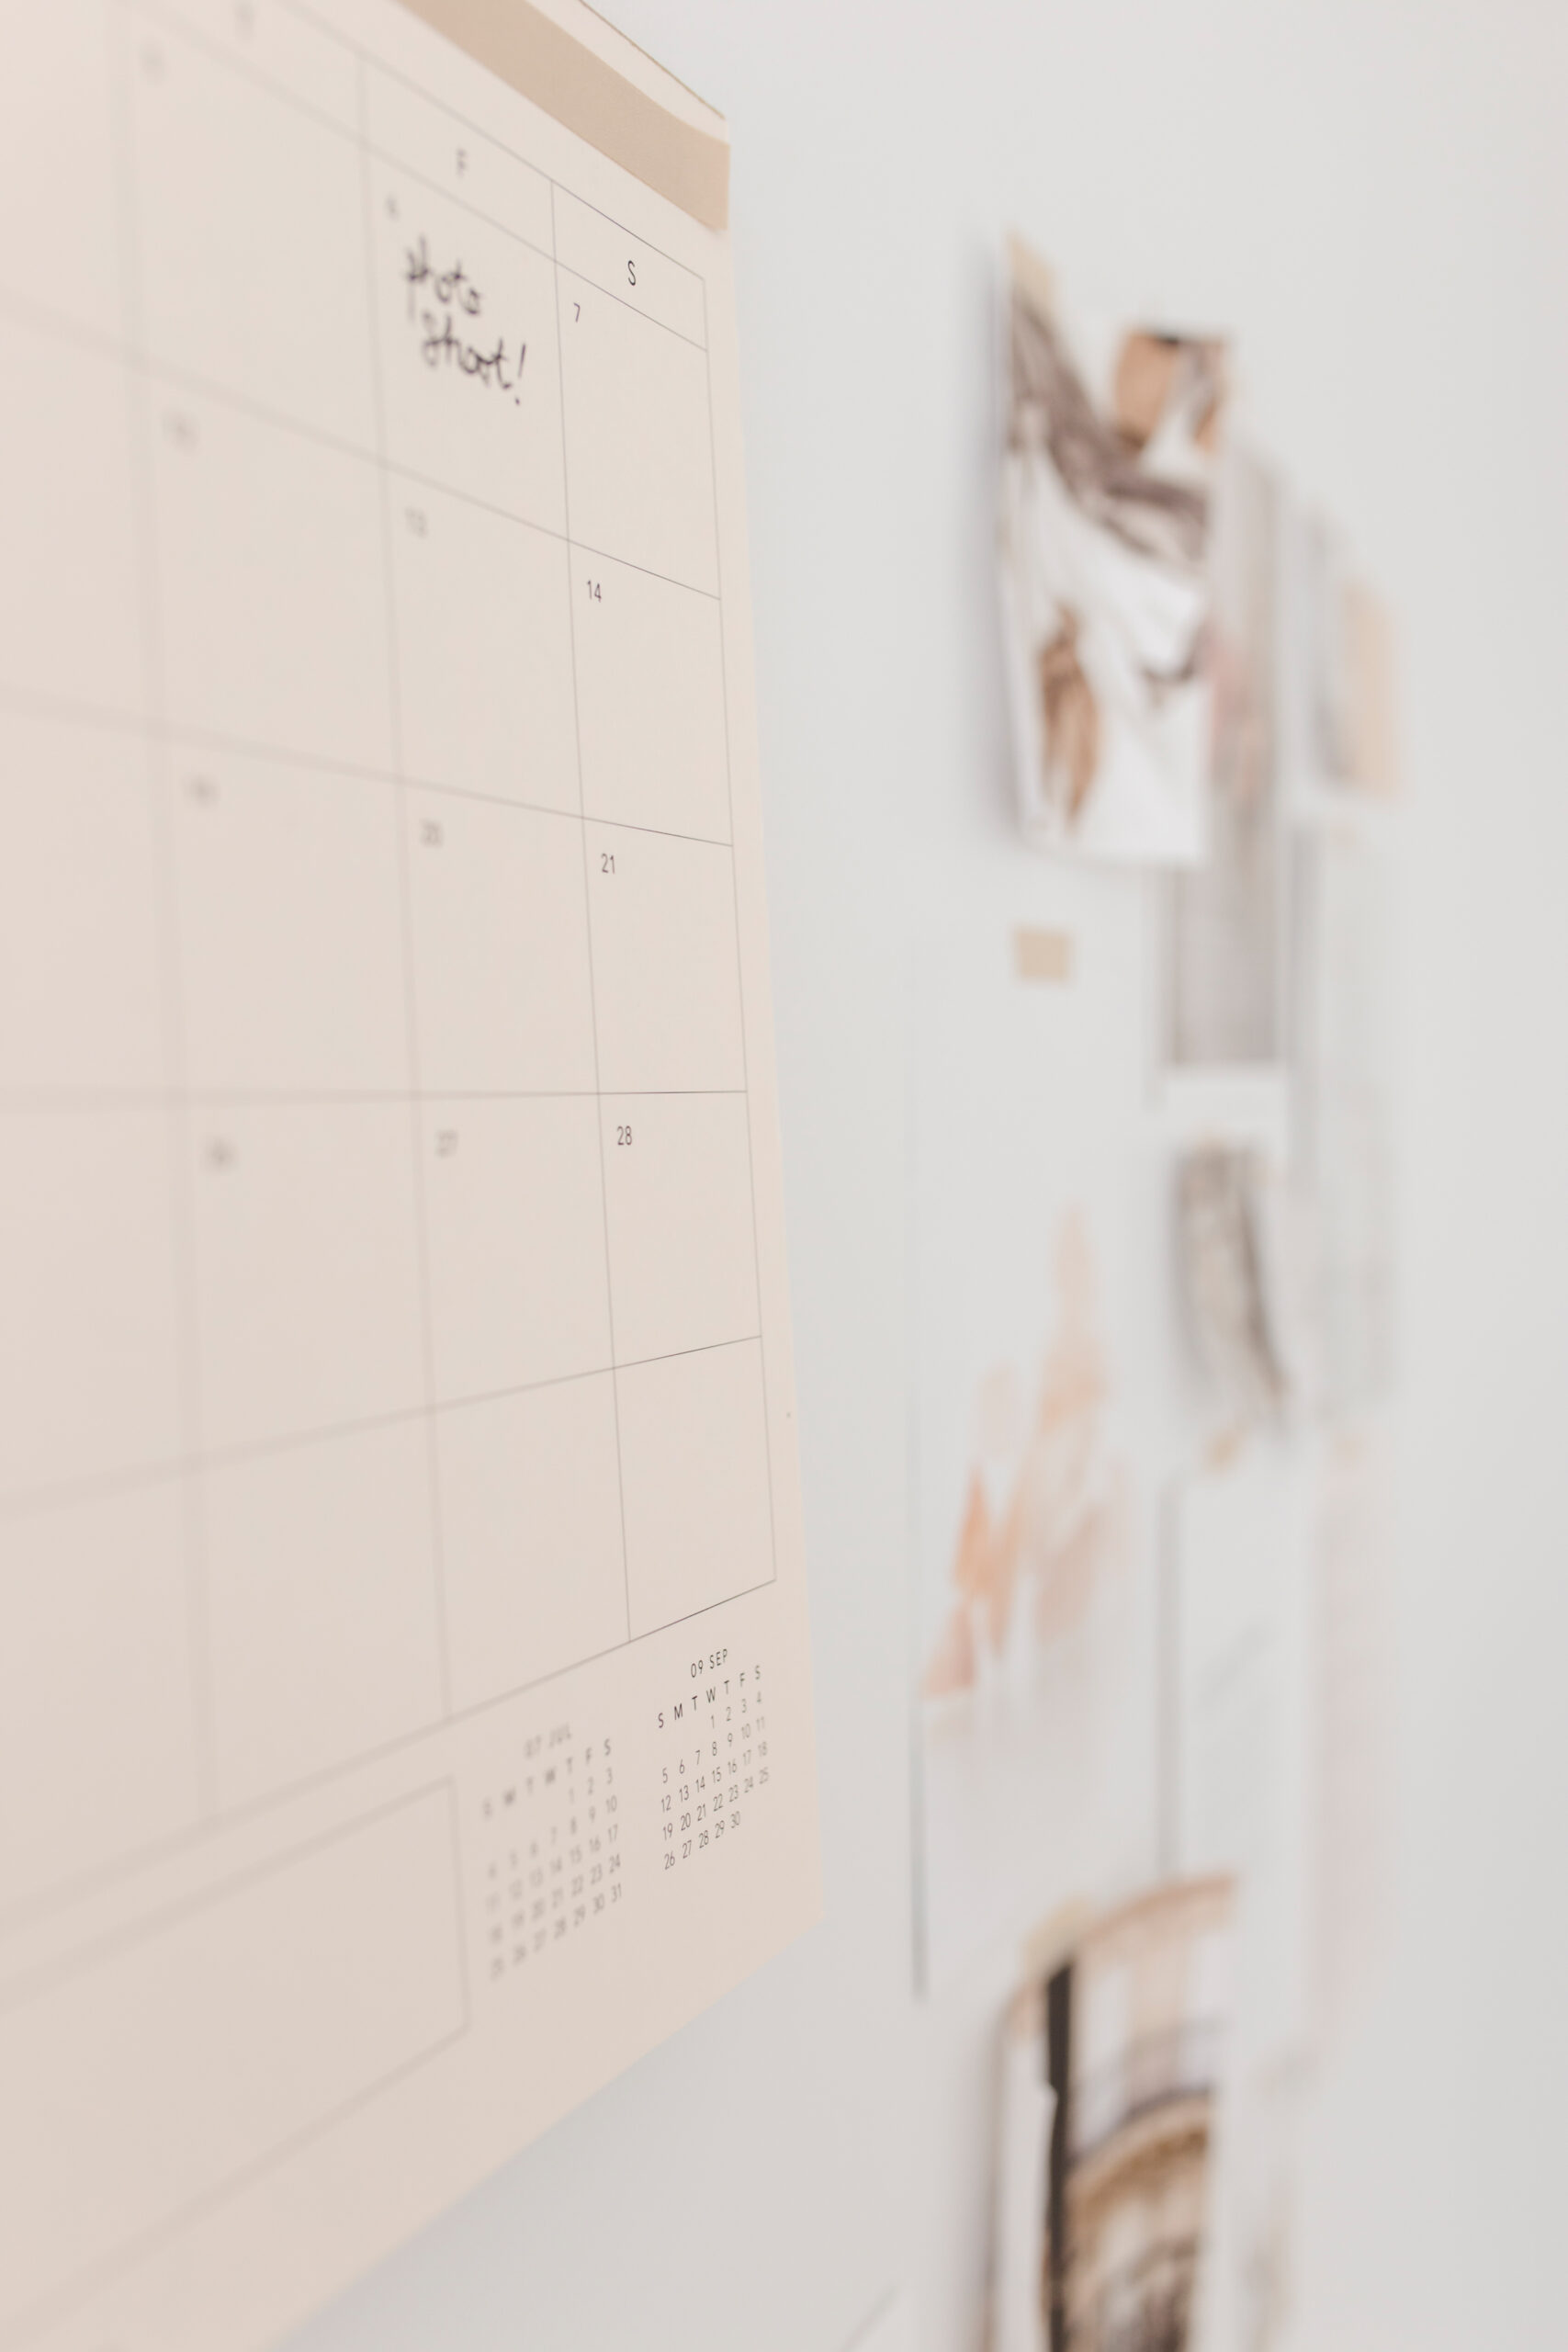 desktop calendar; pinned posts on Instagram